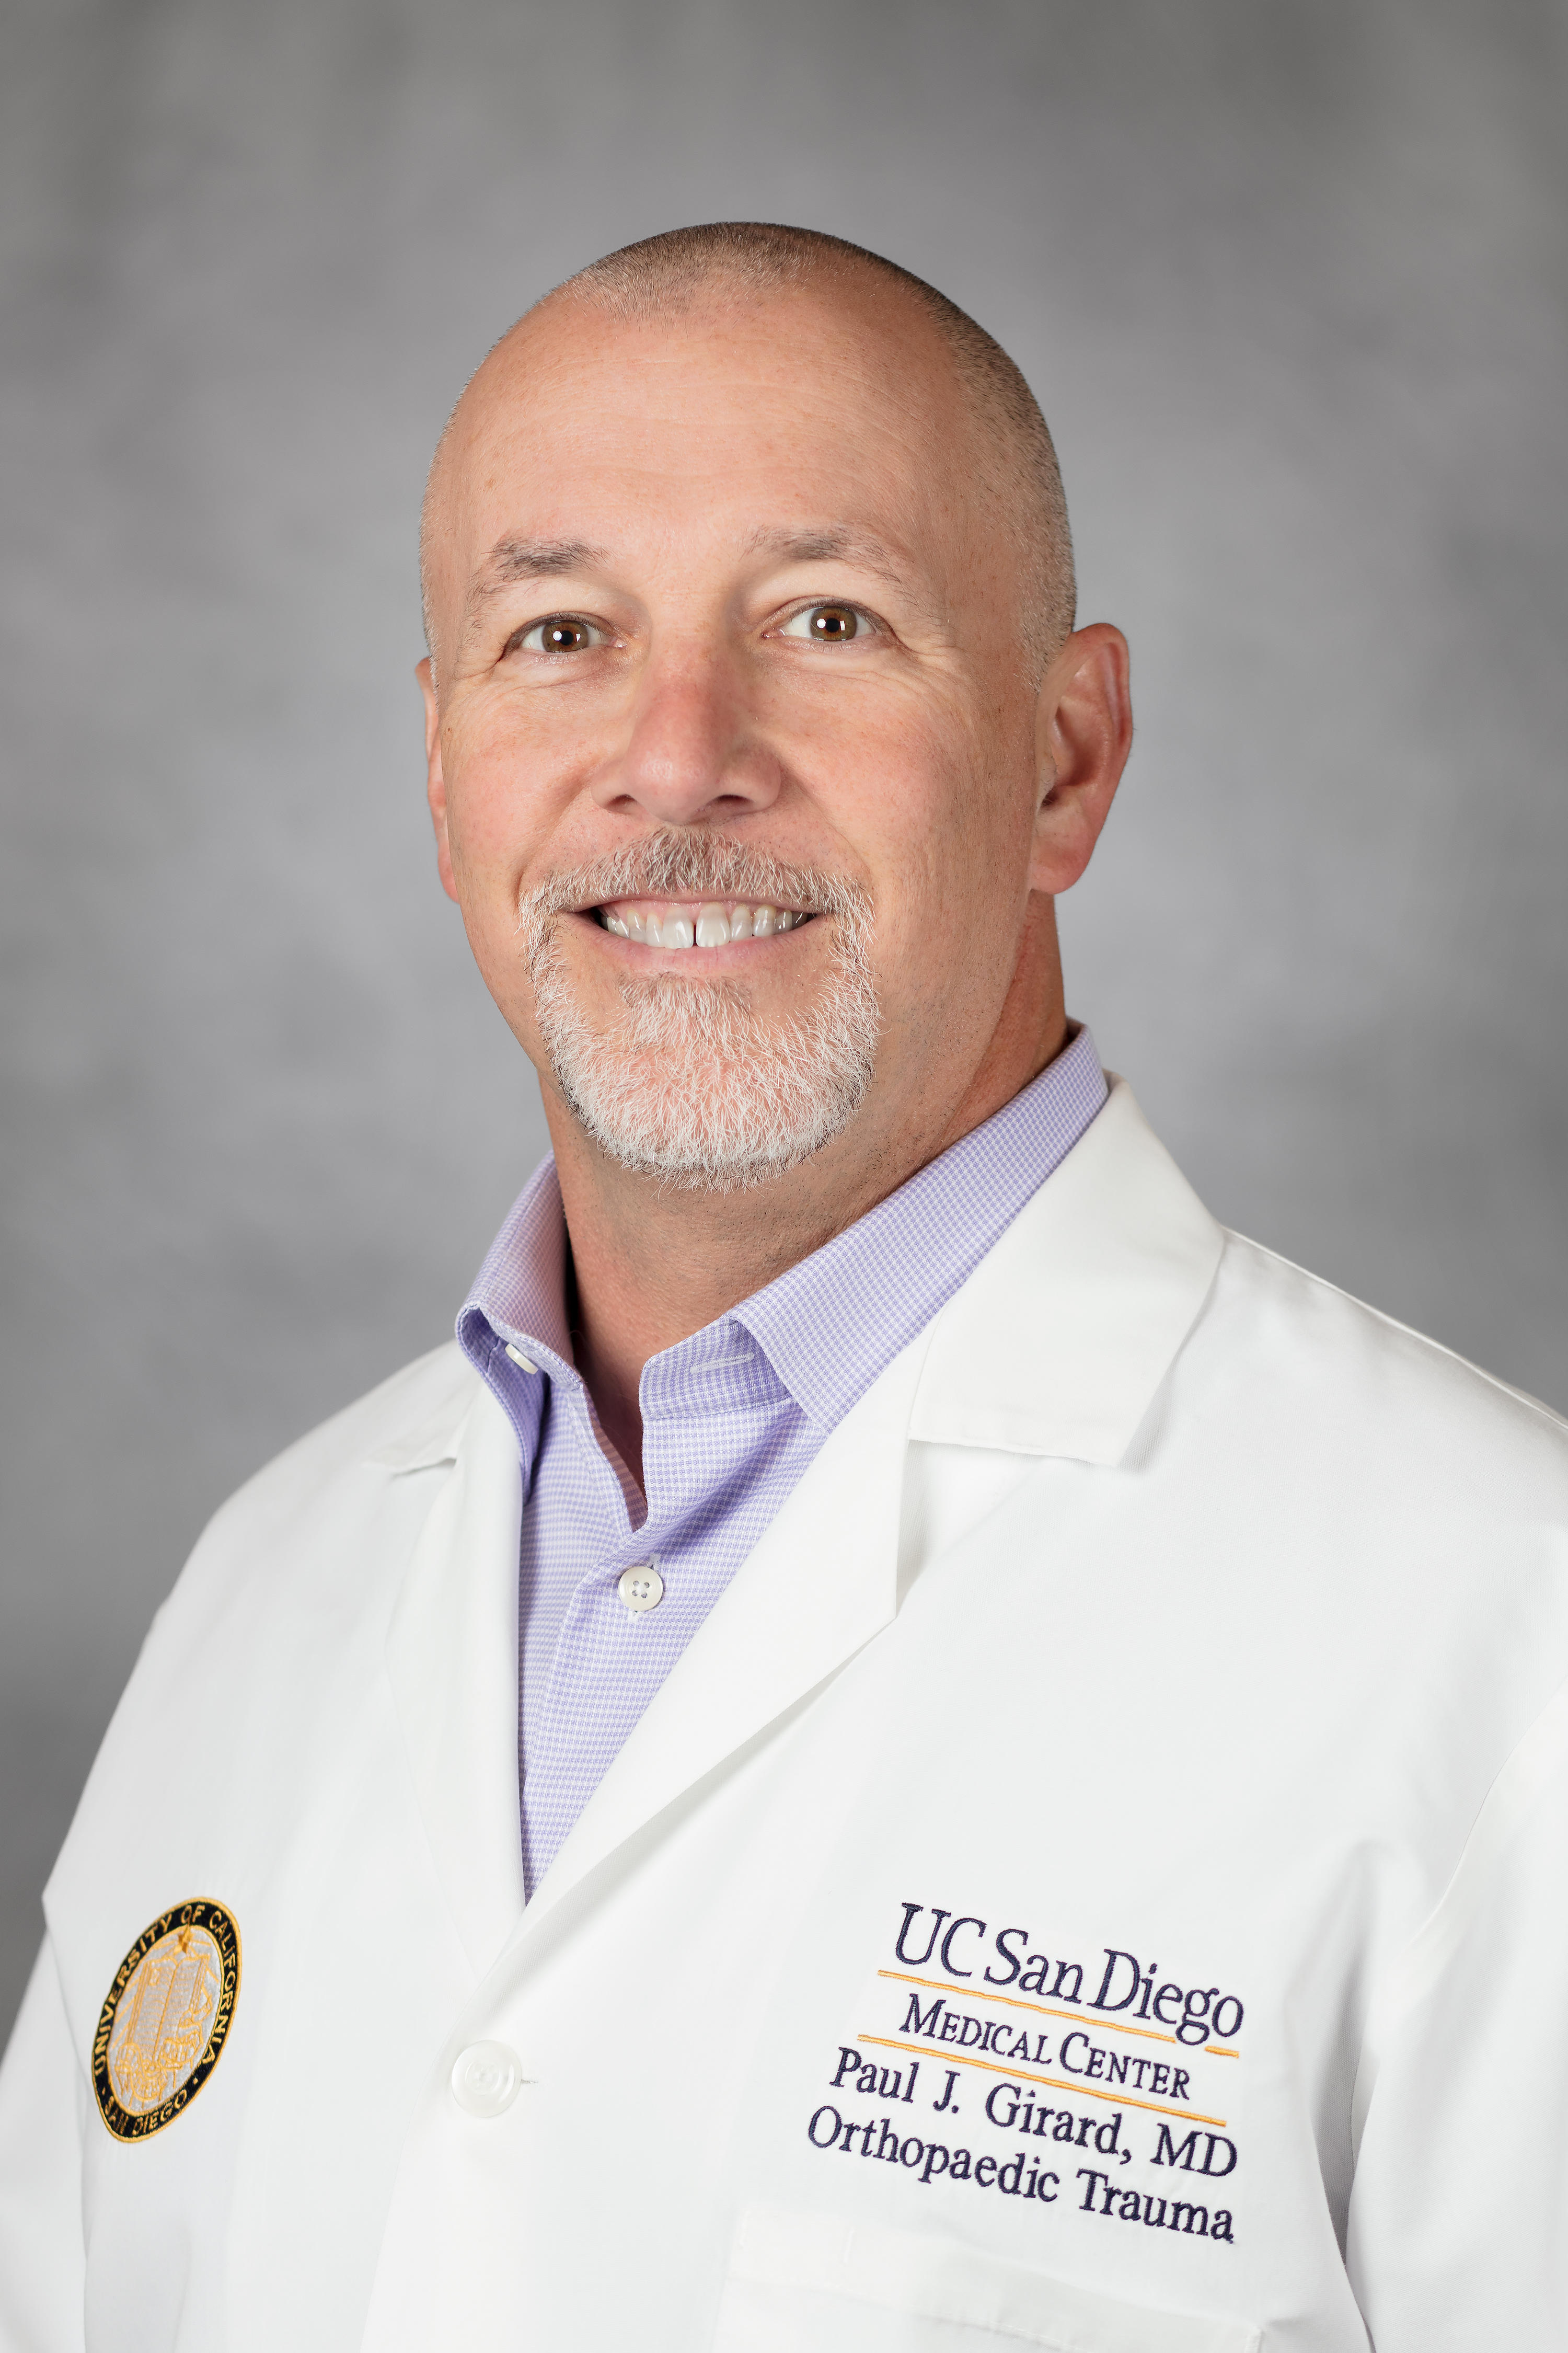 Dr. Paul Joseph Girard, MD